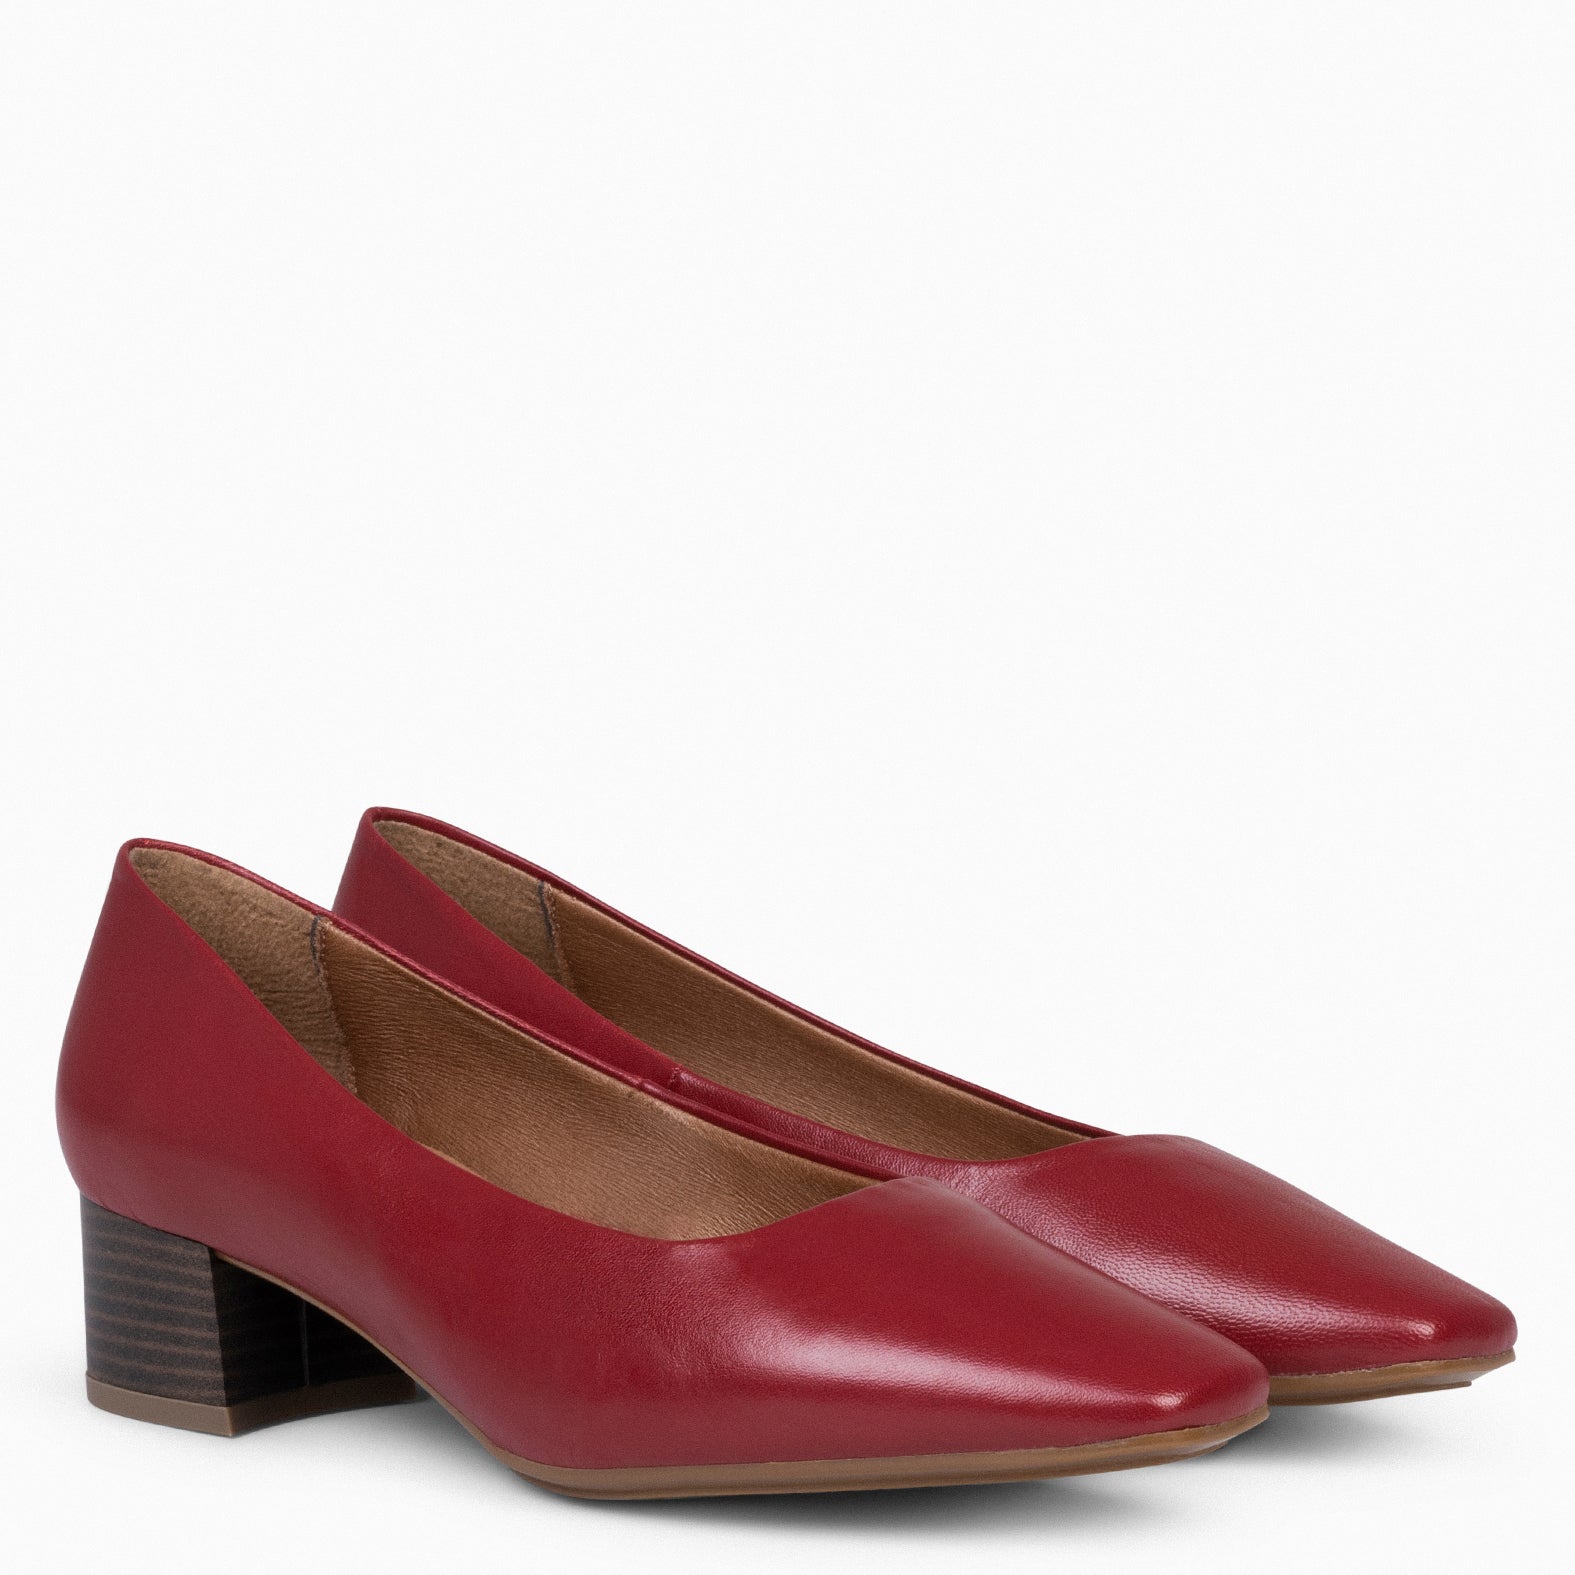 URBAN LADY – BURGUNDY Low heel nappa shoes 